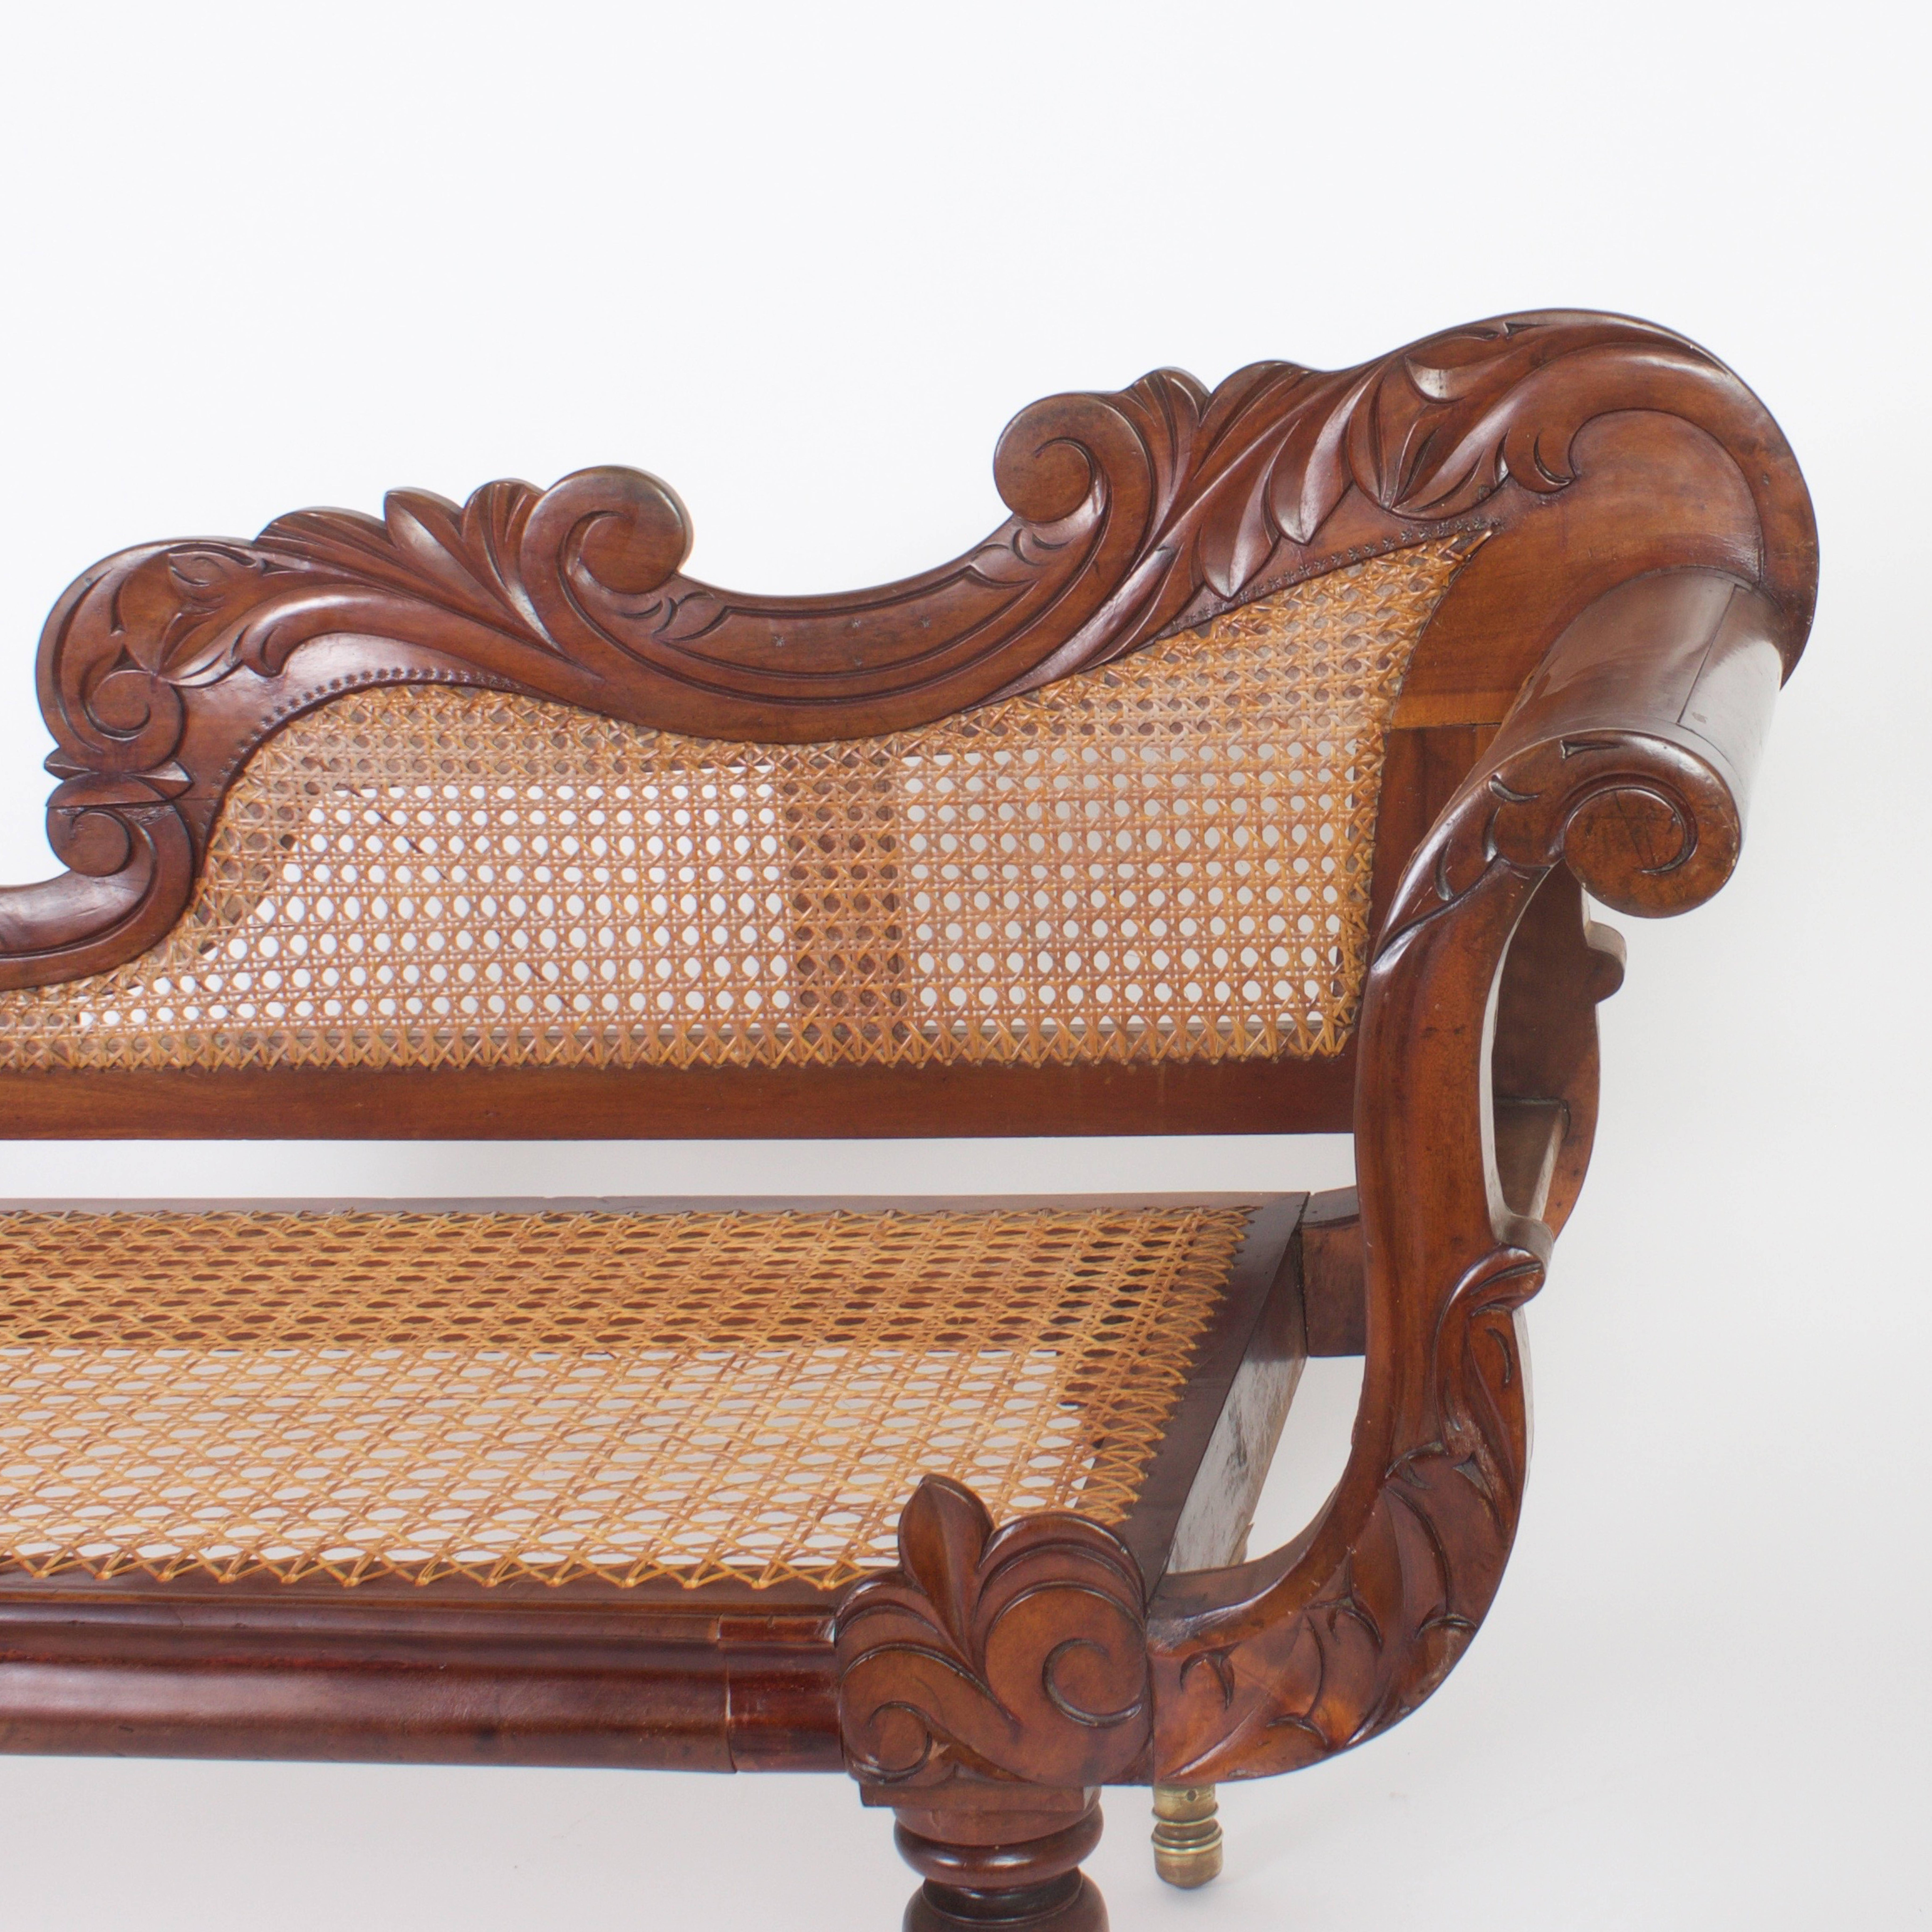 19th Century British Colonial Mahogany Antique Chaise Longue